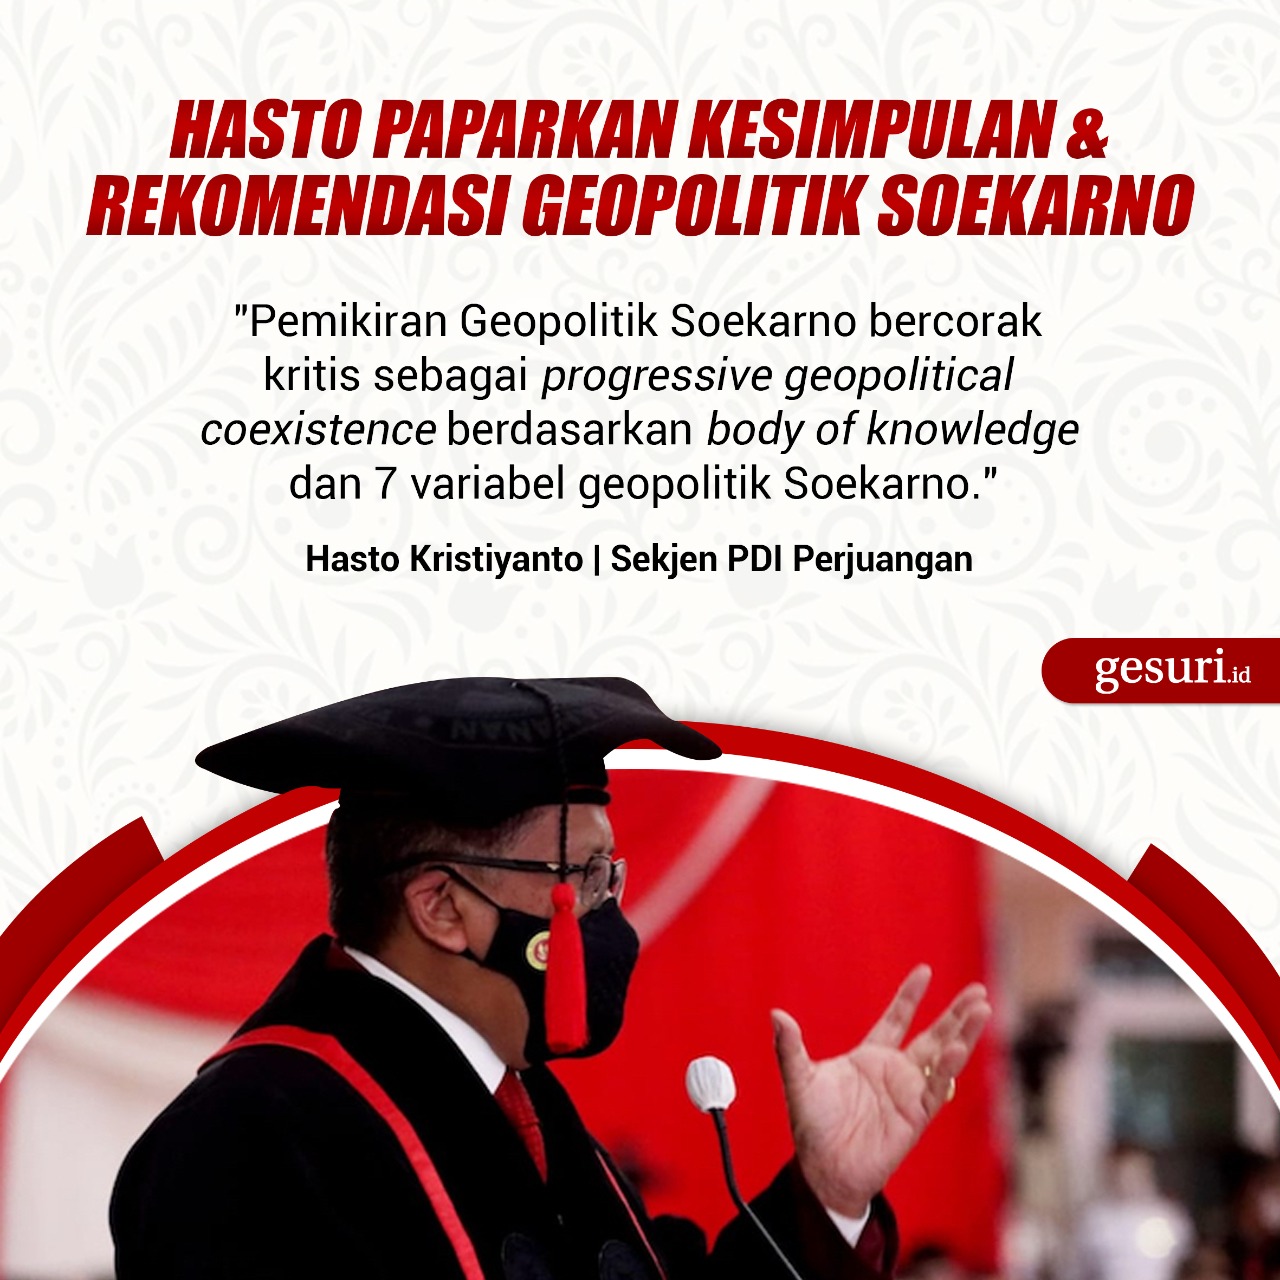 Hasto Paparkan Kesimpulan & Rekomendasi Geopolitik Soekarno